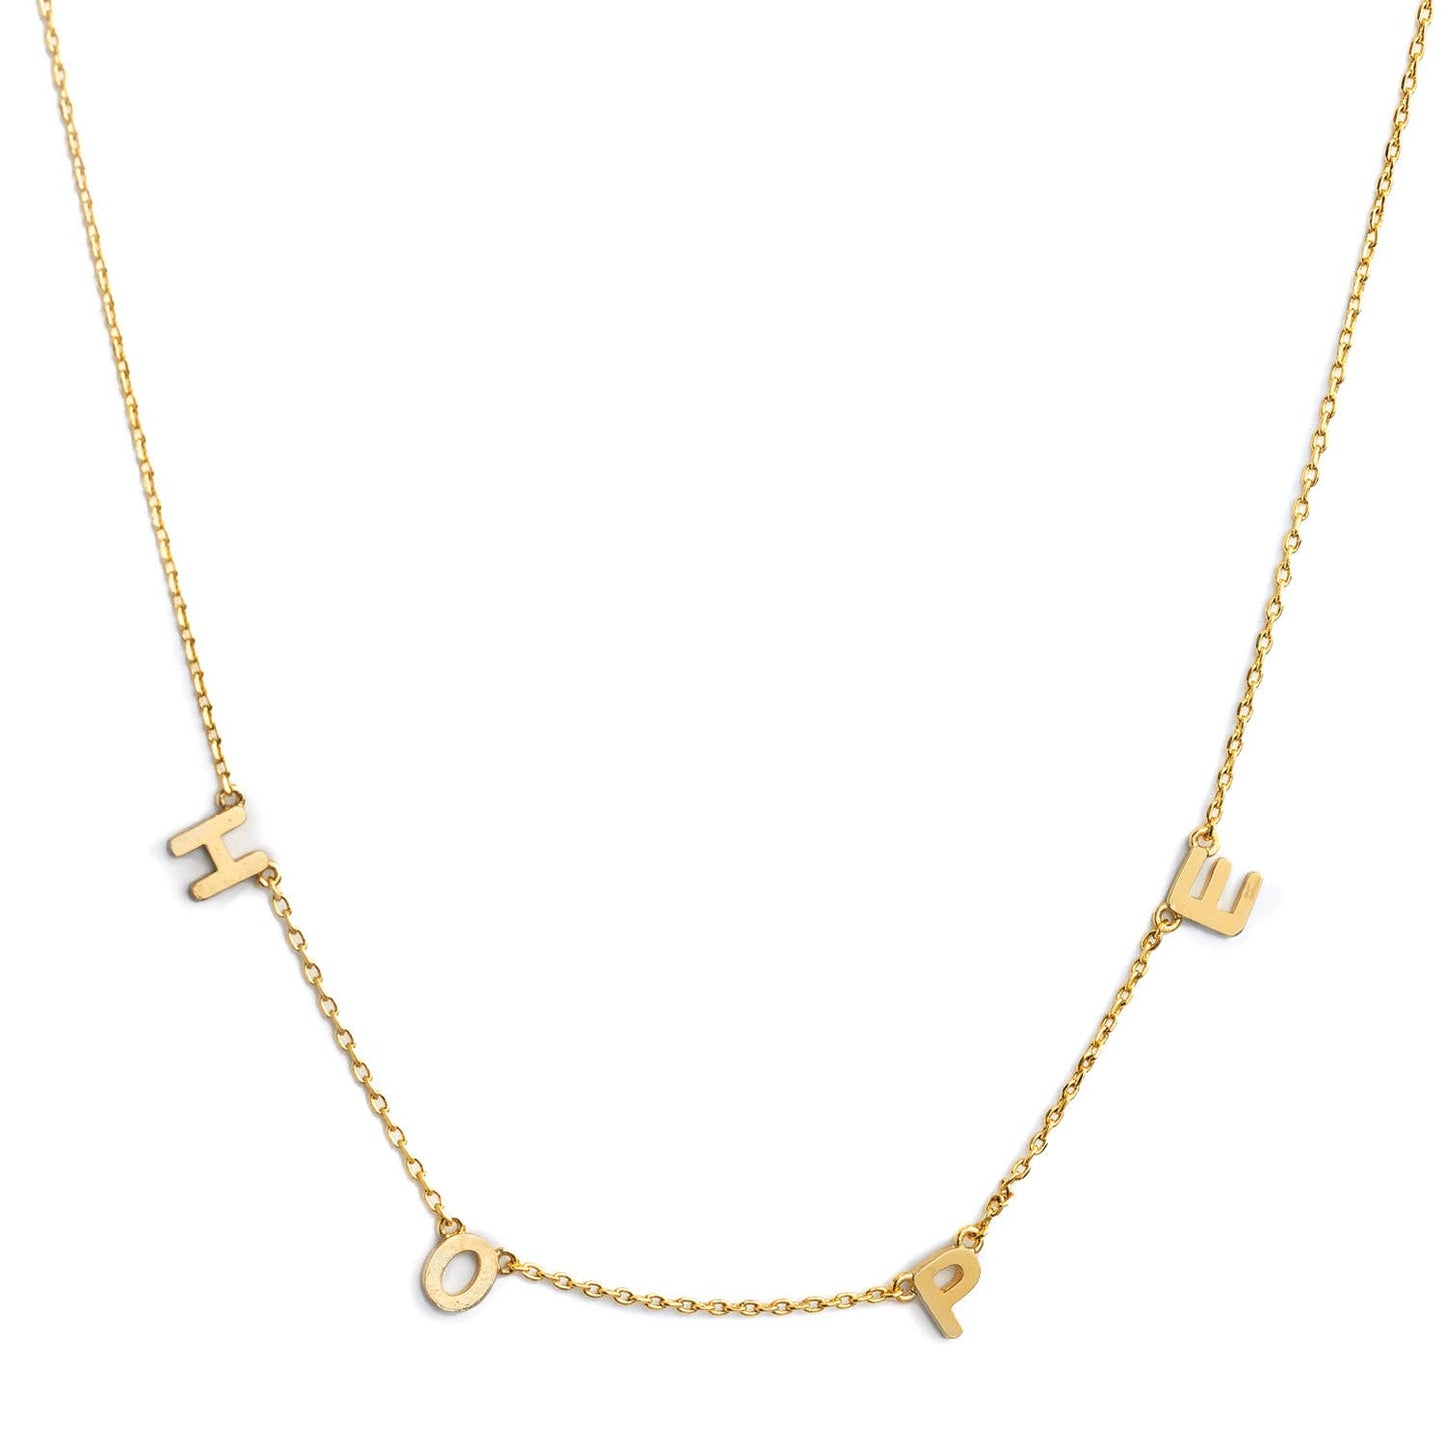 Splendid Iris - HOPE Necklace, SALE: Gold